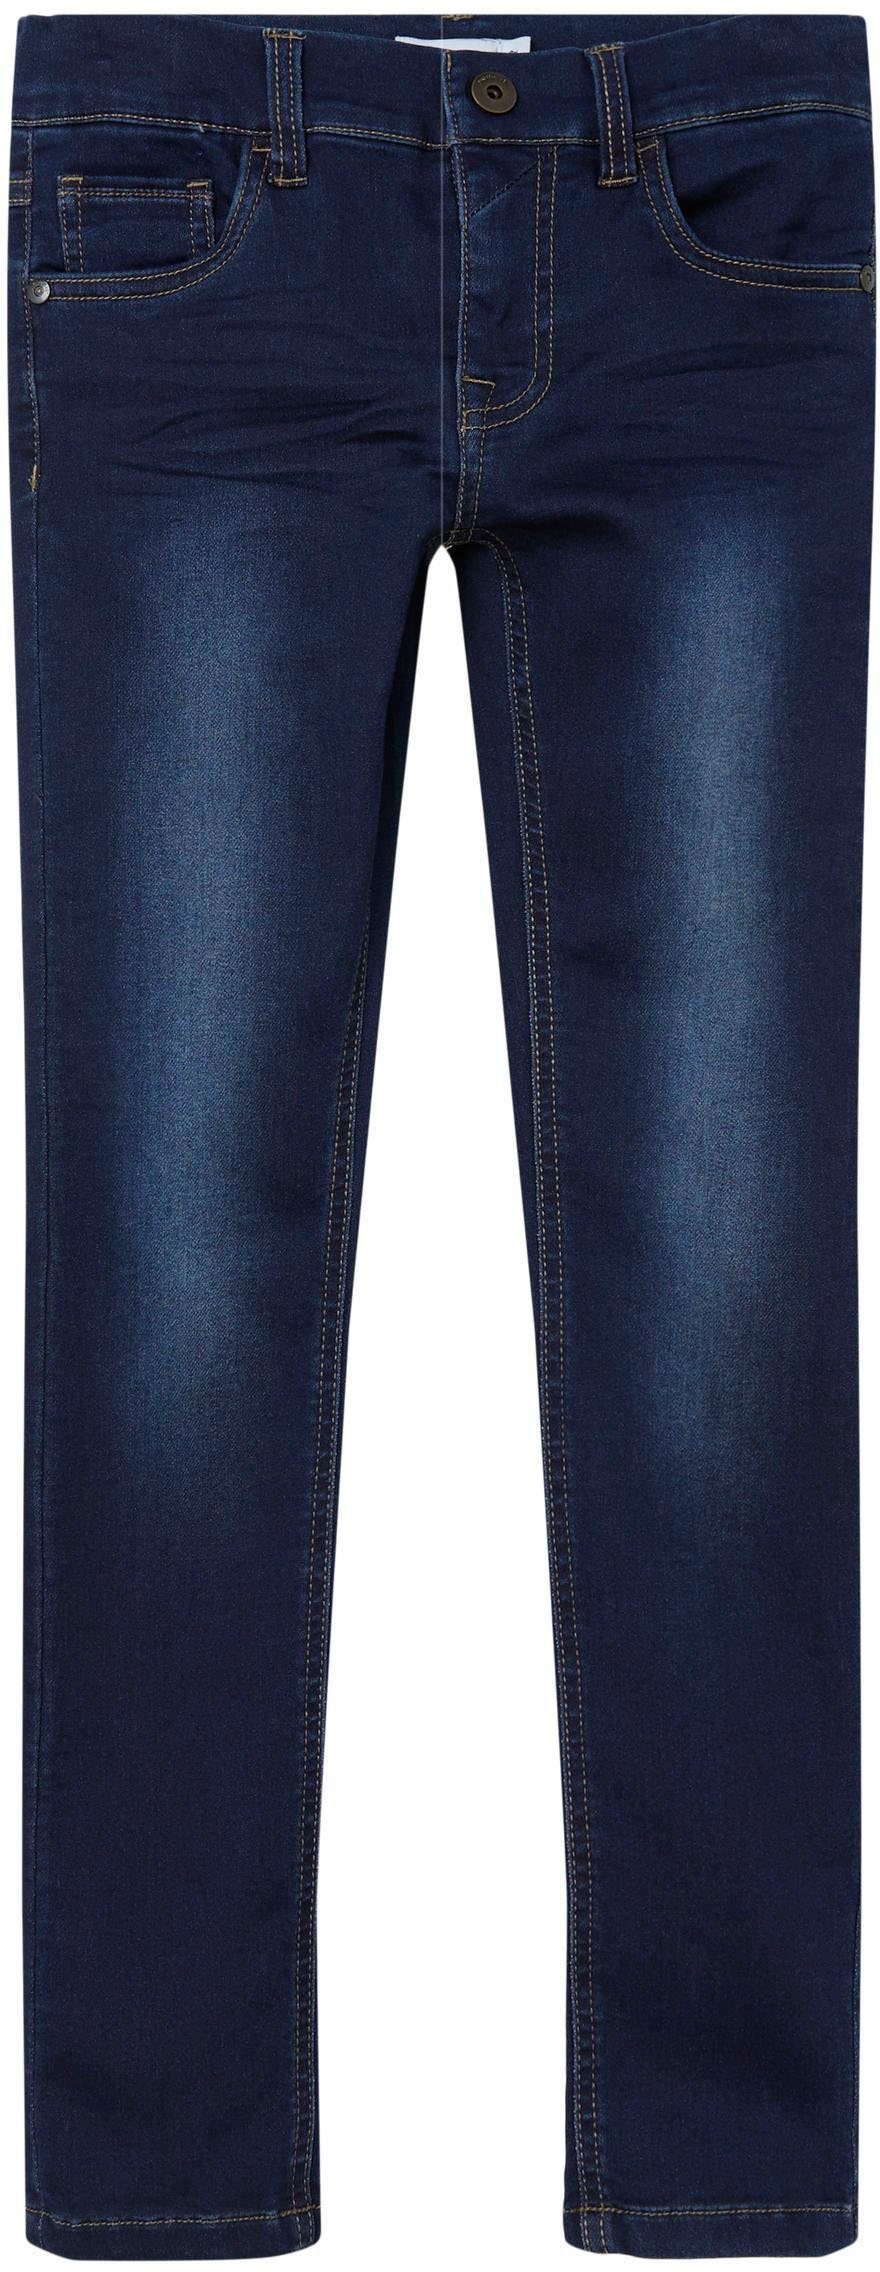 COR1 SWE Name dark NKMTHEO PANT blue DNMTHAYER Stretch-Jeans denim It